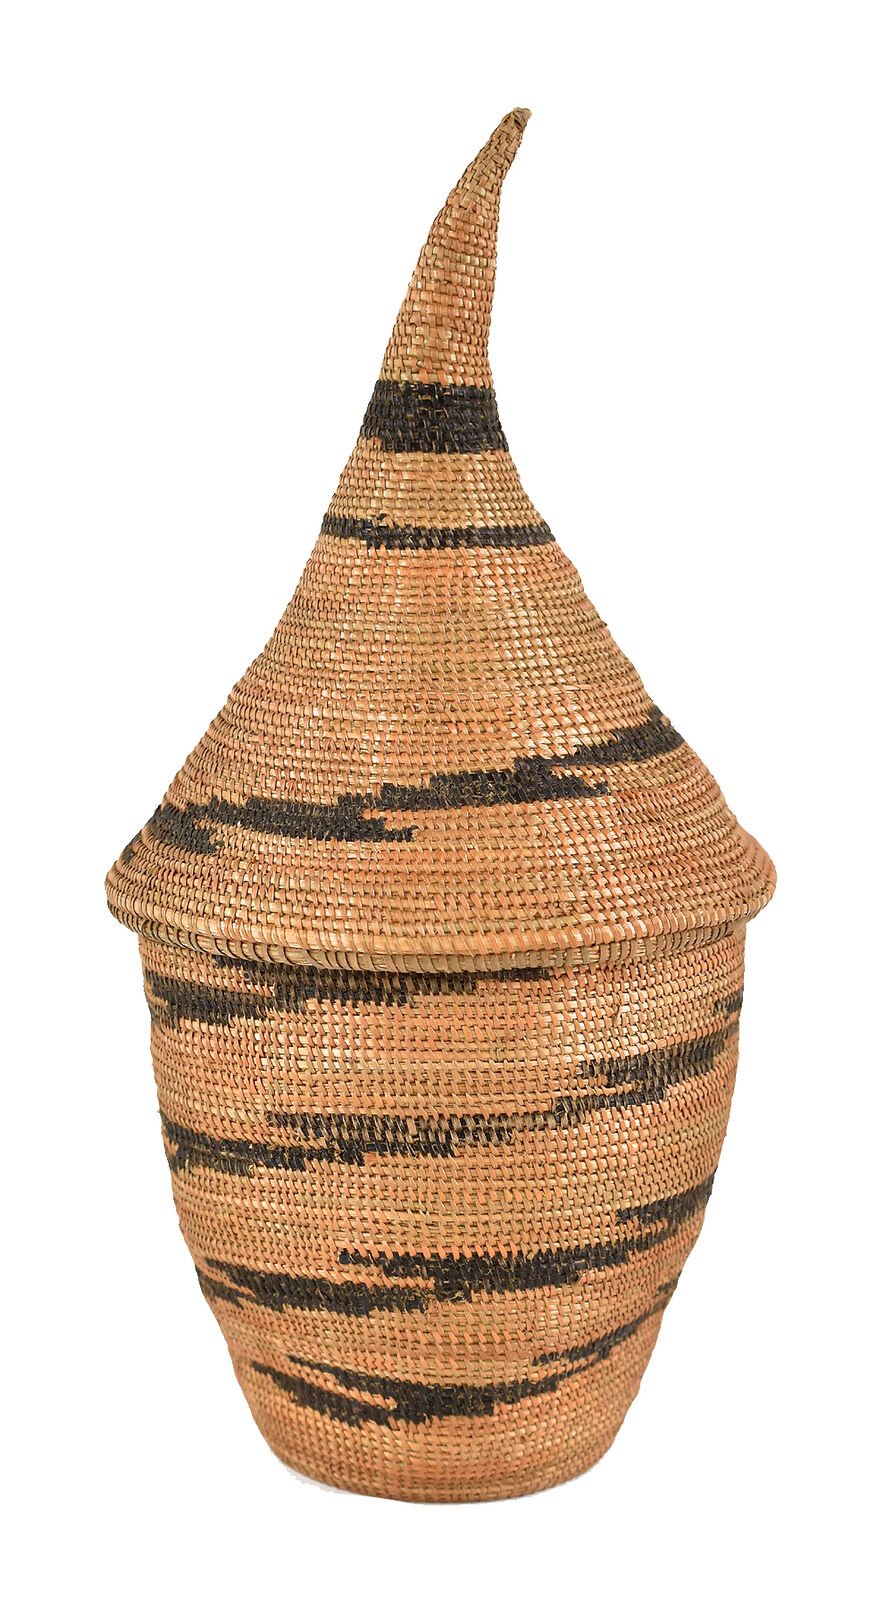 Tutsi Tight Weave Basket Rwanda Old African Art